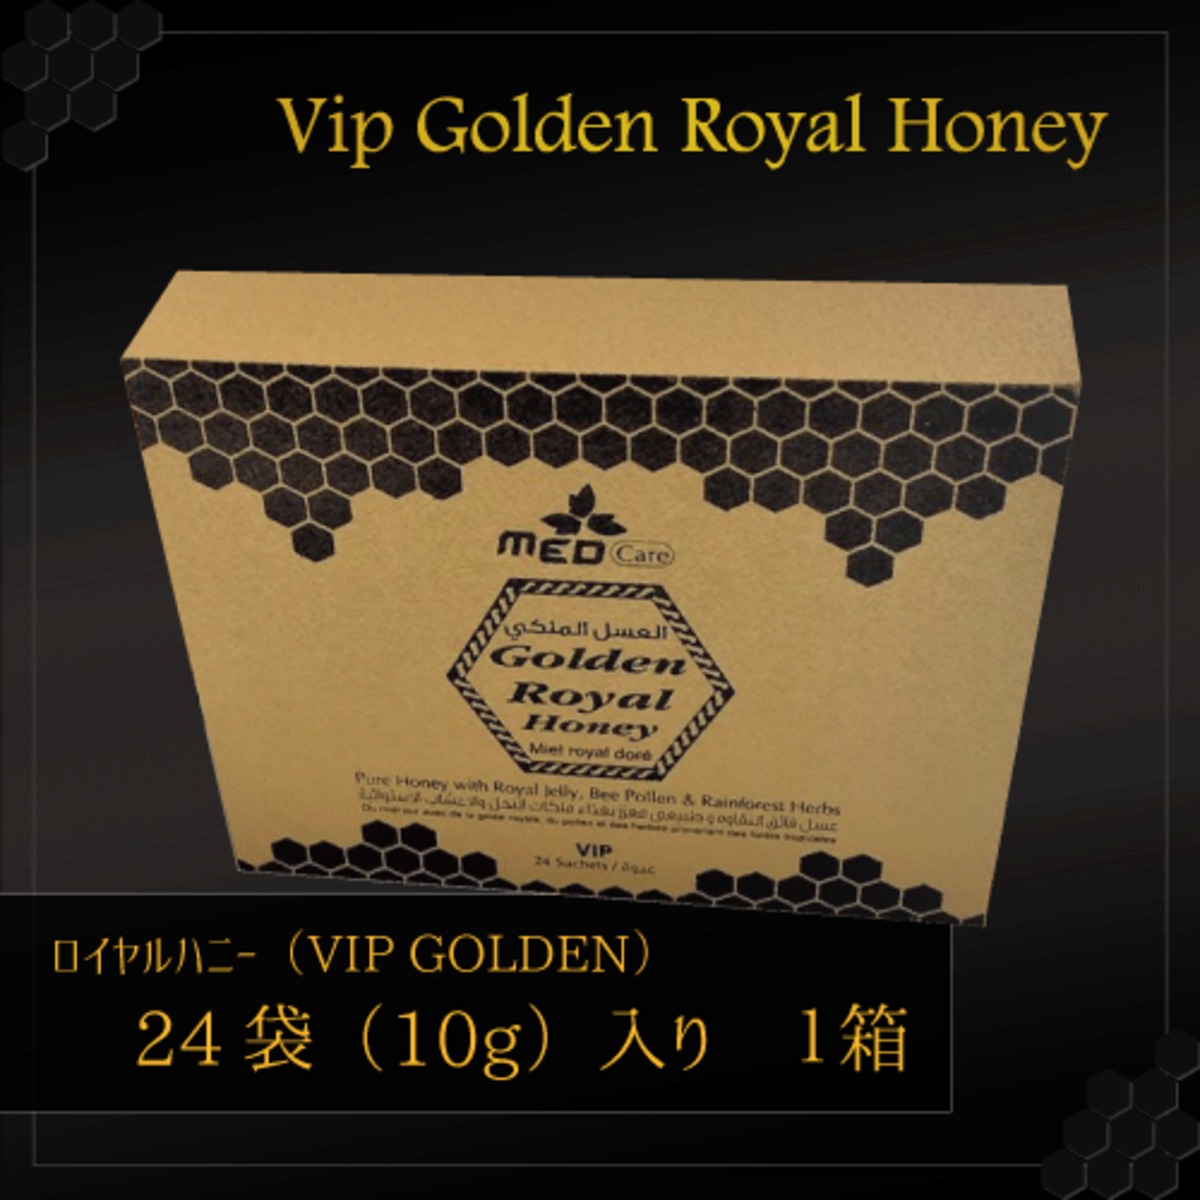 Vip Golden Royal Honey】 ビップゴールデンロイヤルハニー | beambitious